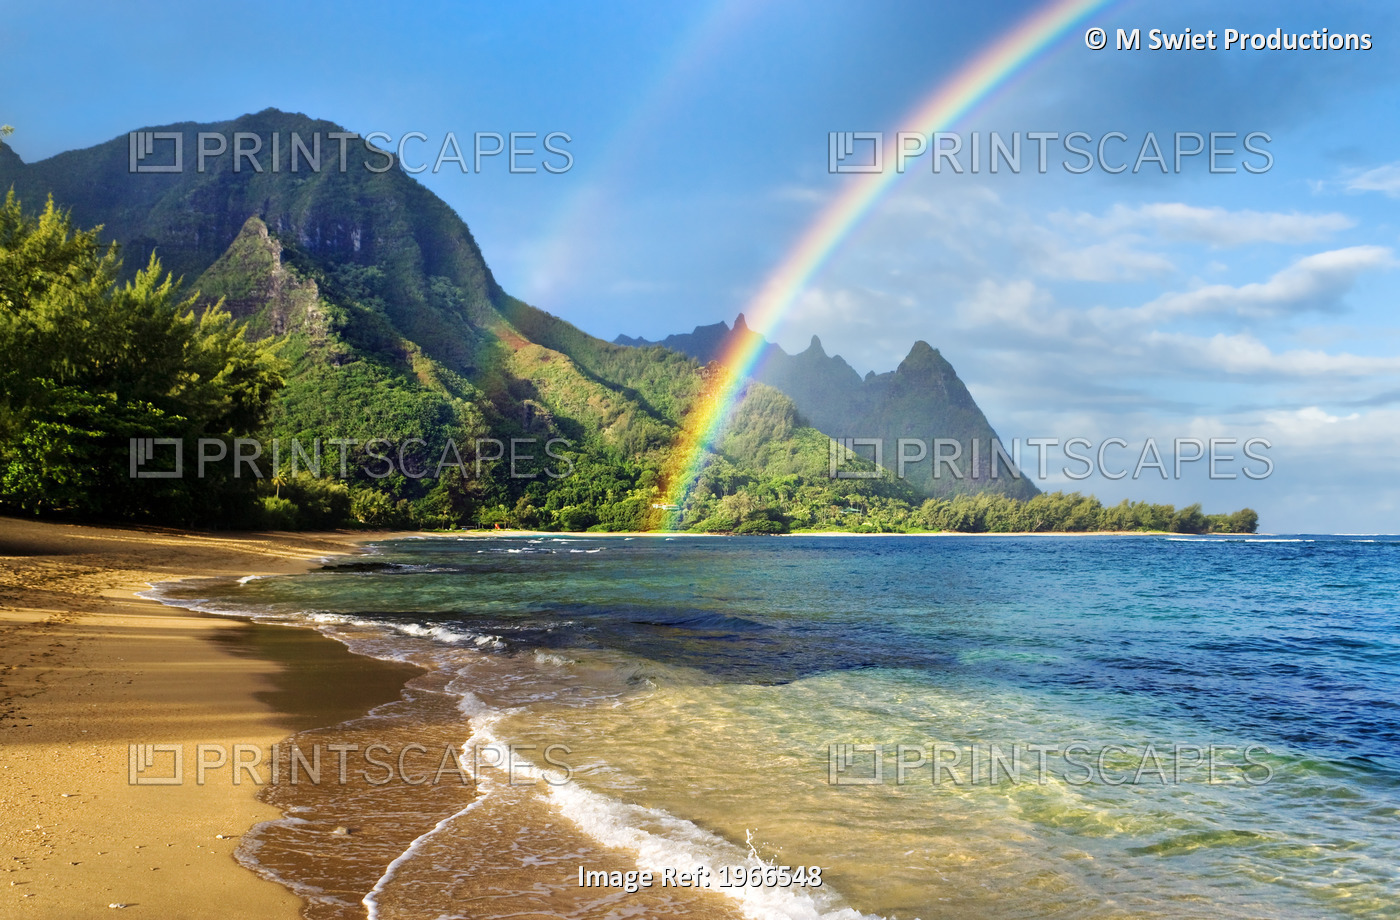 A double rainbow over the coastline of a Hawaiian island with mountains and ...